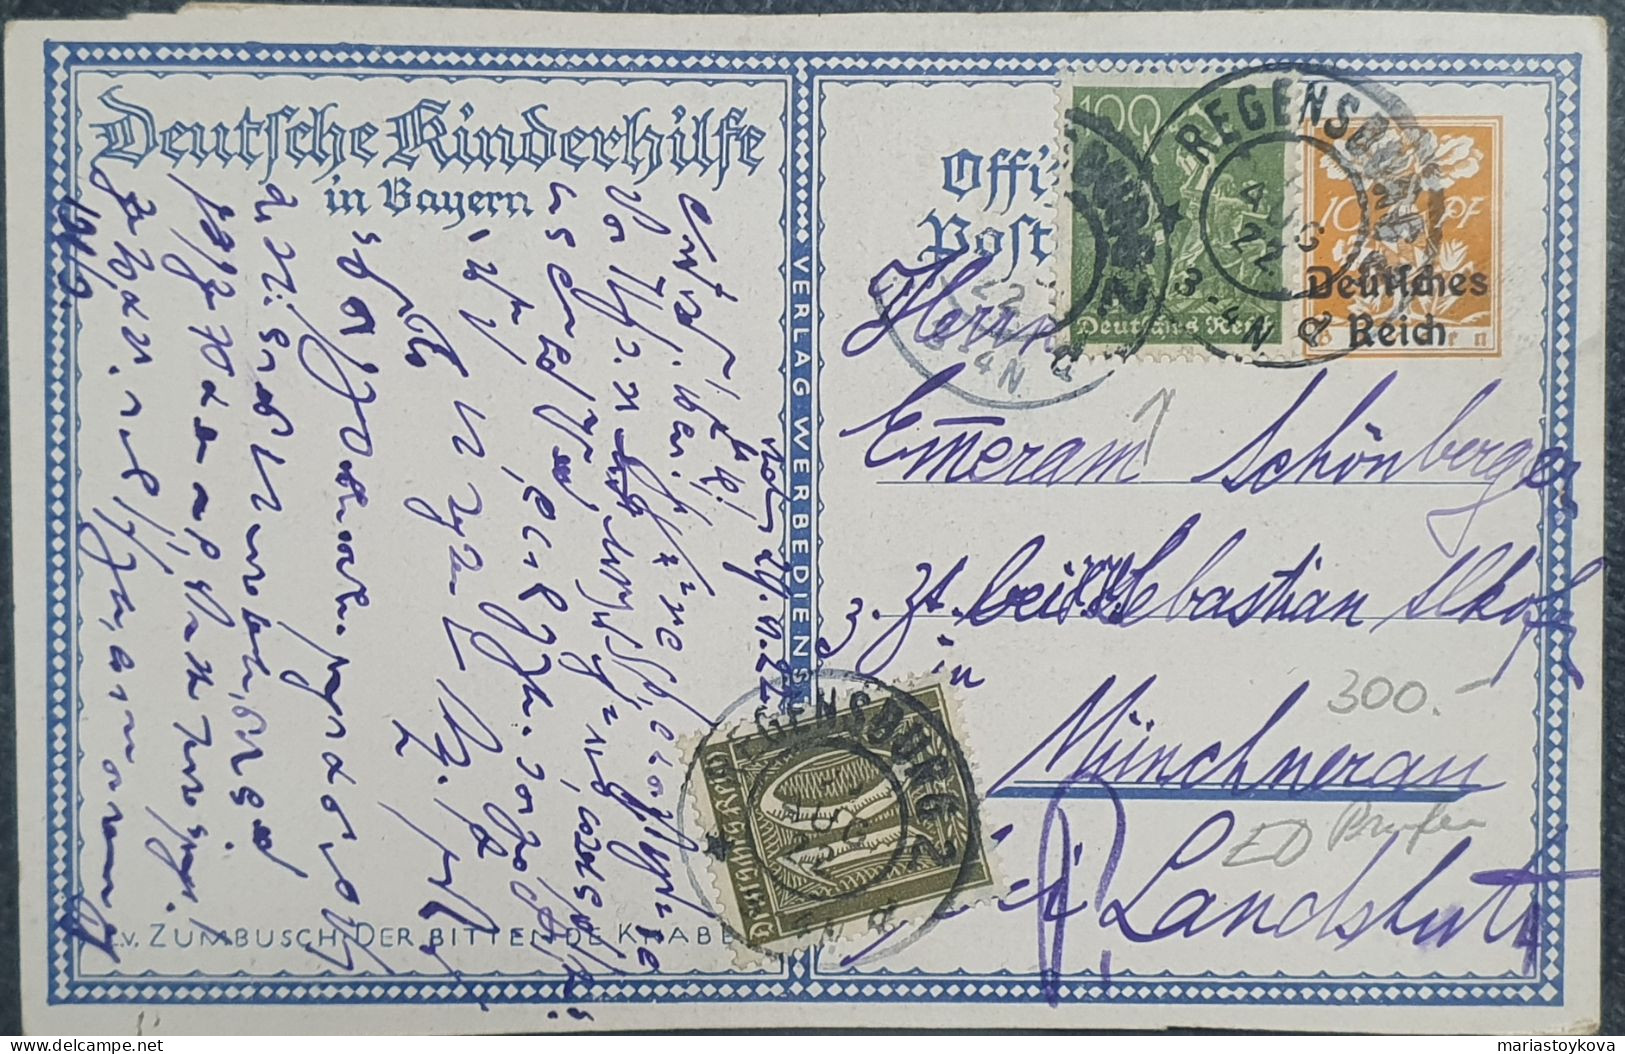 Zumbusch, Ludwig. DR-Infla - Deutsche Kinderhilfe I. Bayern 10 Pfg. Privat-GA-Karte Regensburg 1922 - Zumbusch, Ludwig V.